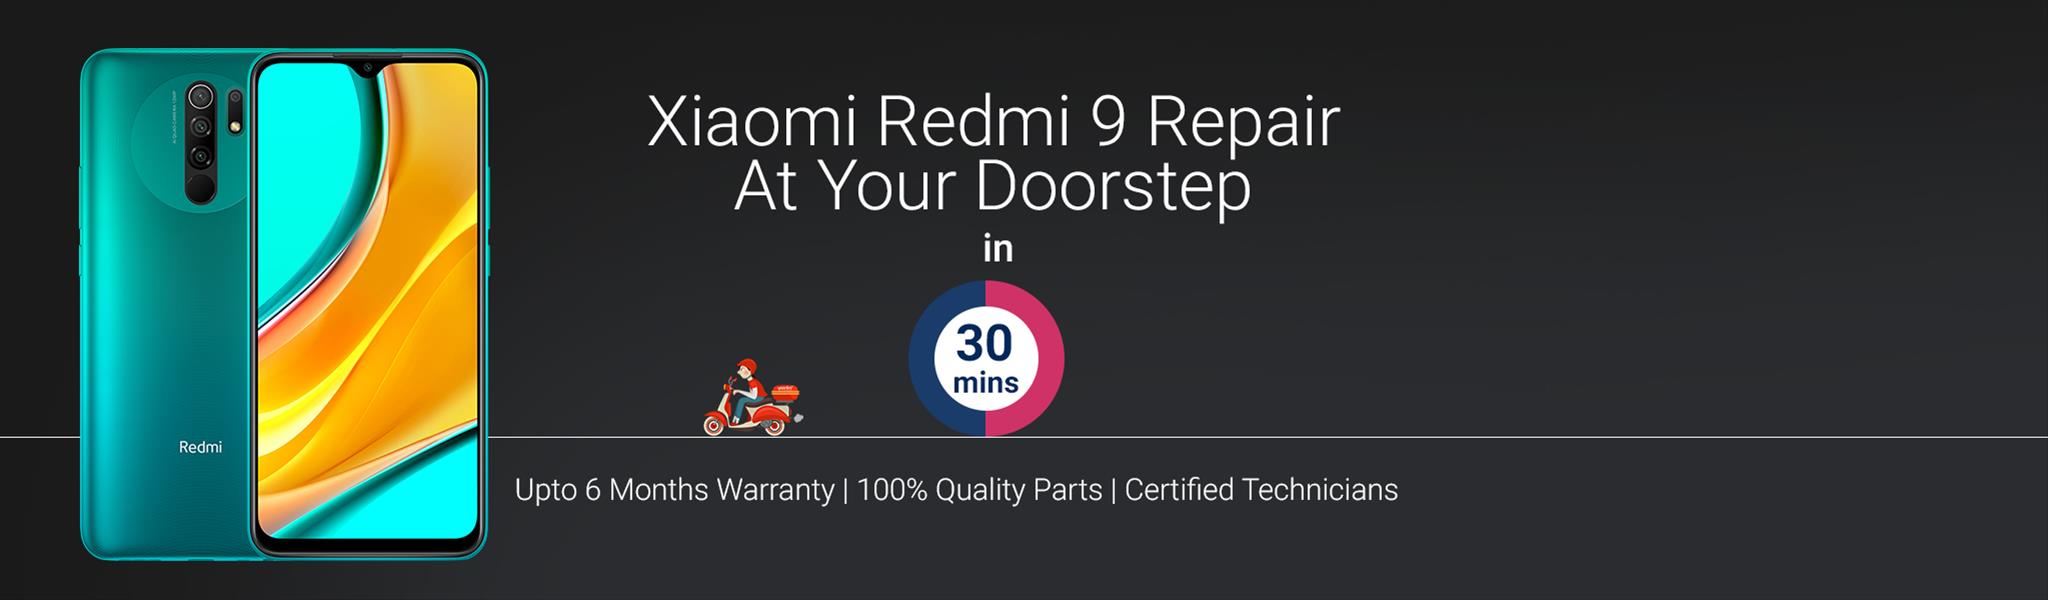 xiaomi-redmi-9-repair.jpg